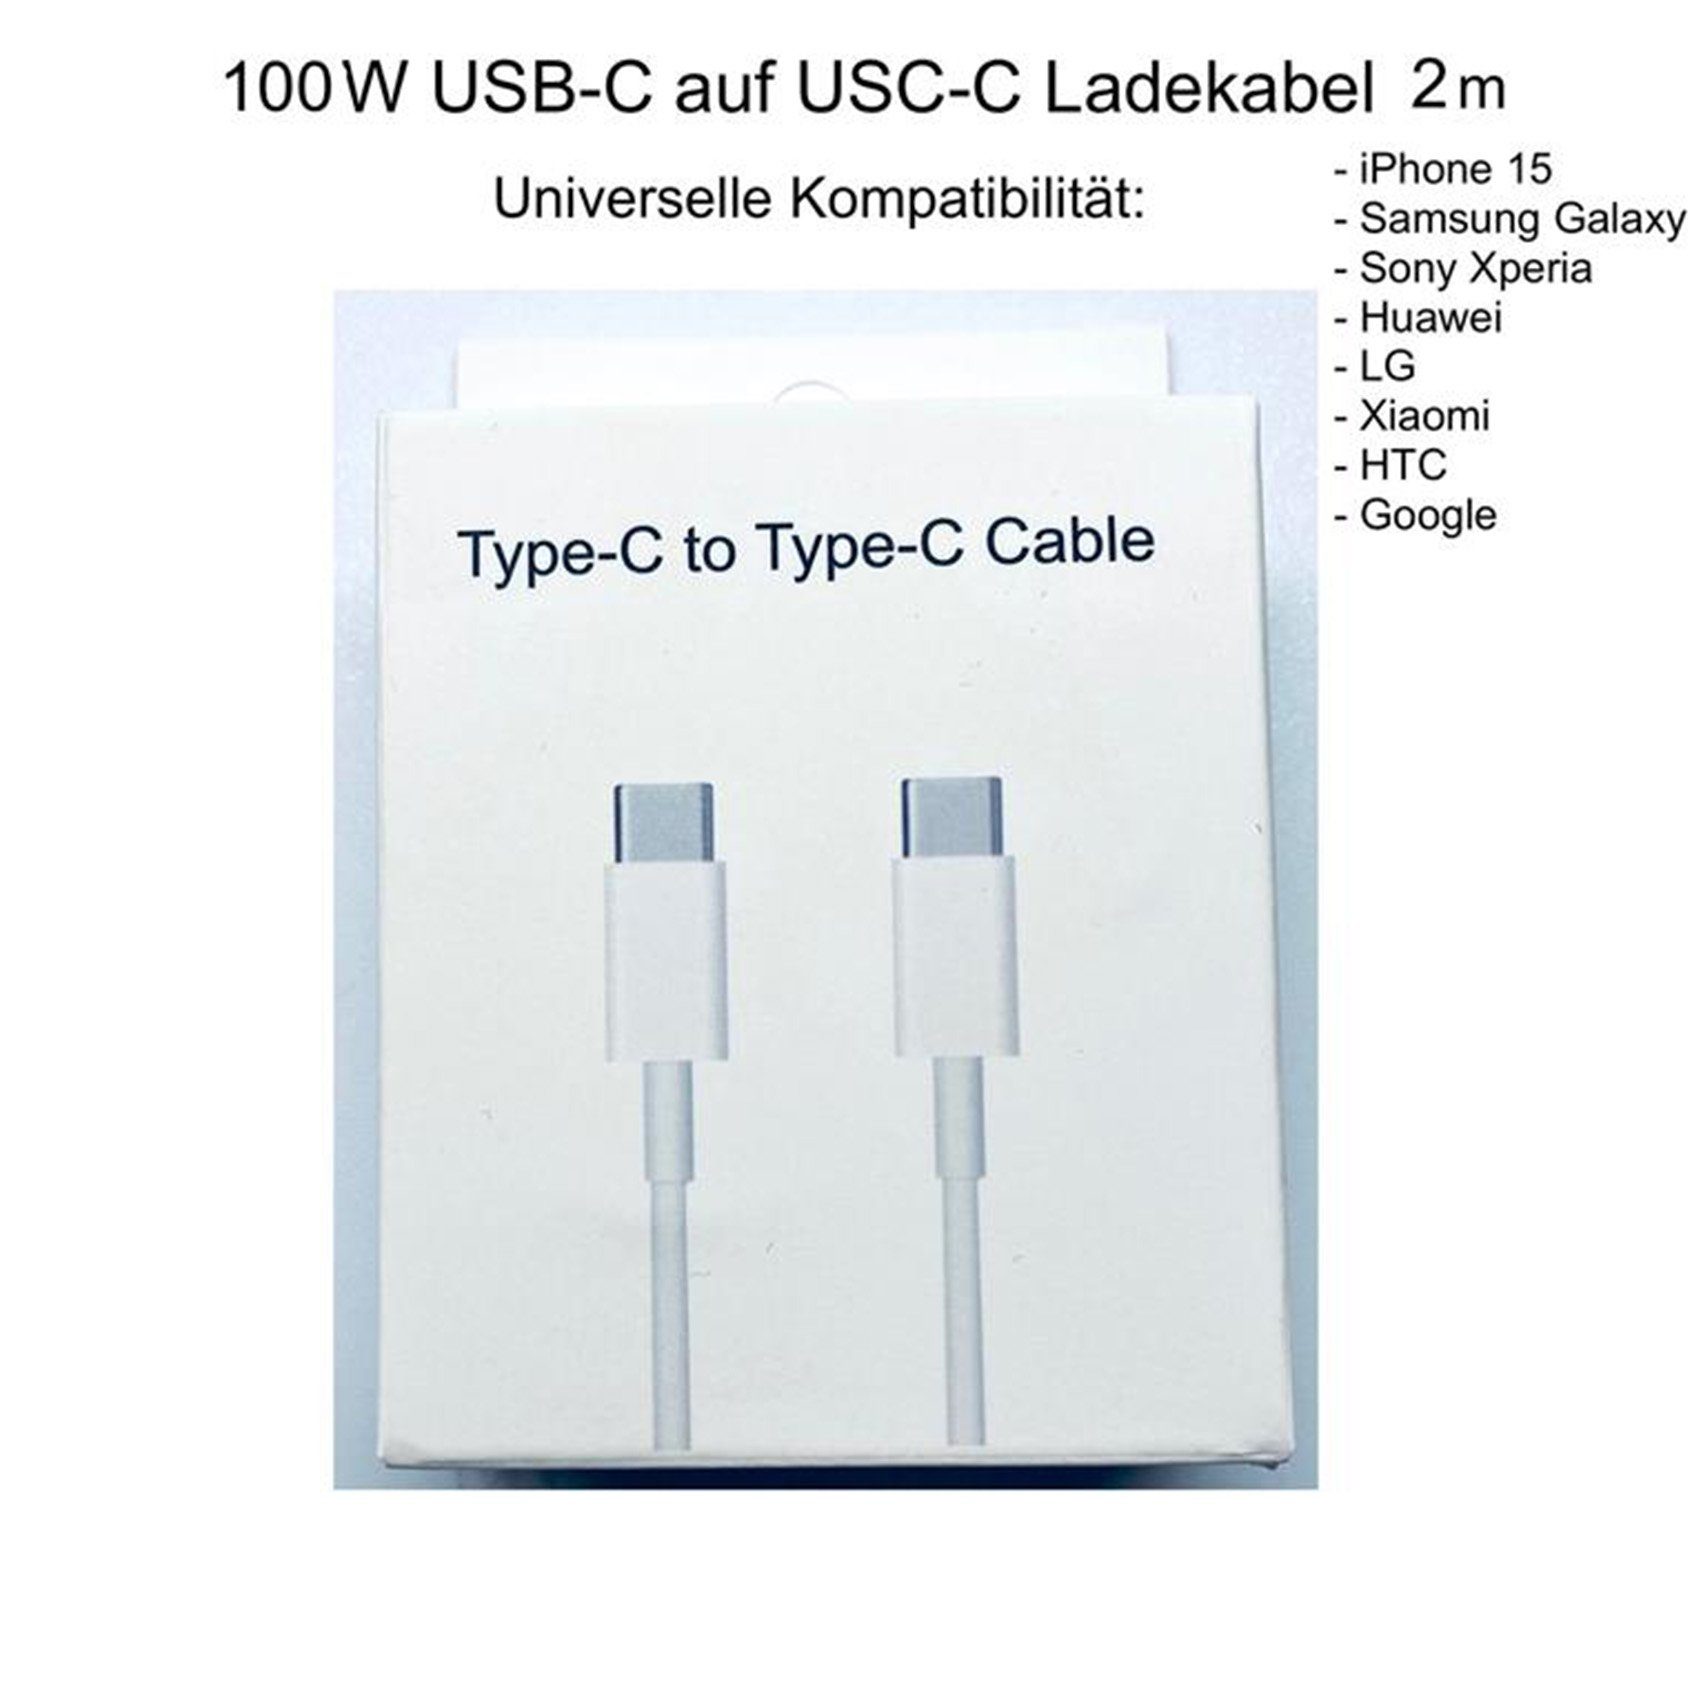 OIITH Apple iPhone 15, Samsung, Huawei, 100W USB-C auf USC-C Ladekabel 2m  USB-Kabel